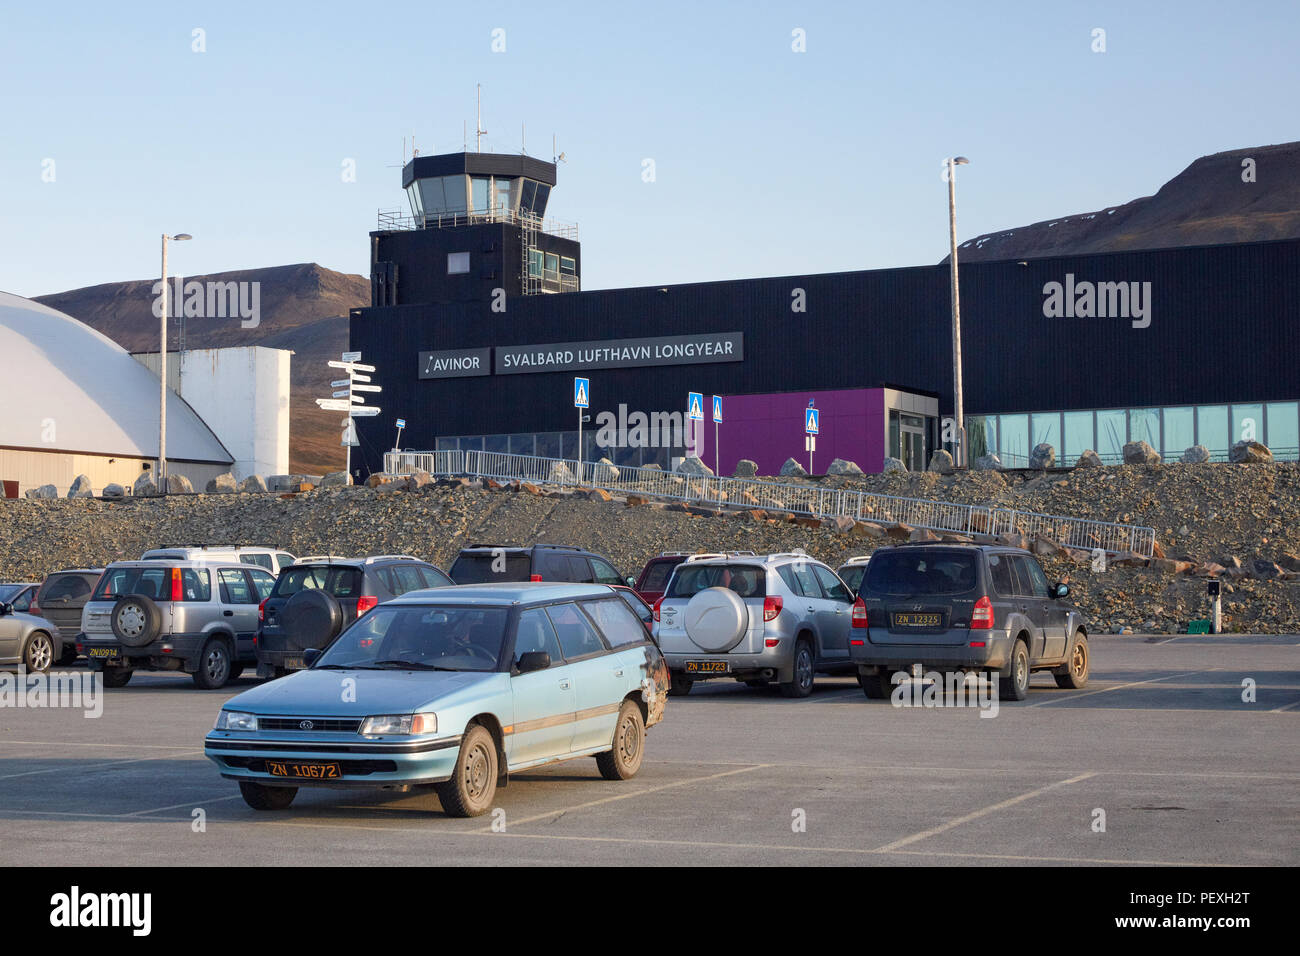 Svalbard Longyearbyen airport, Svalbard Lufthavn Longyer with parking lot in front of it Stock Photo